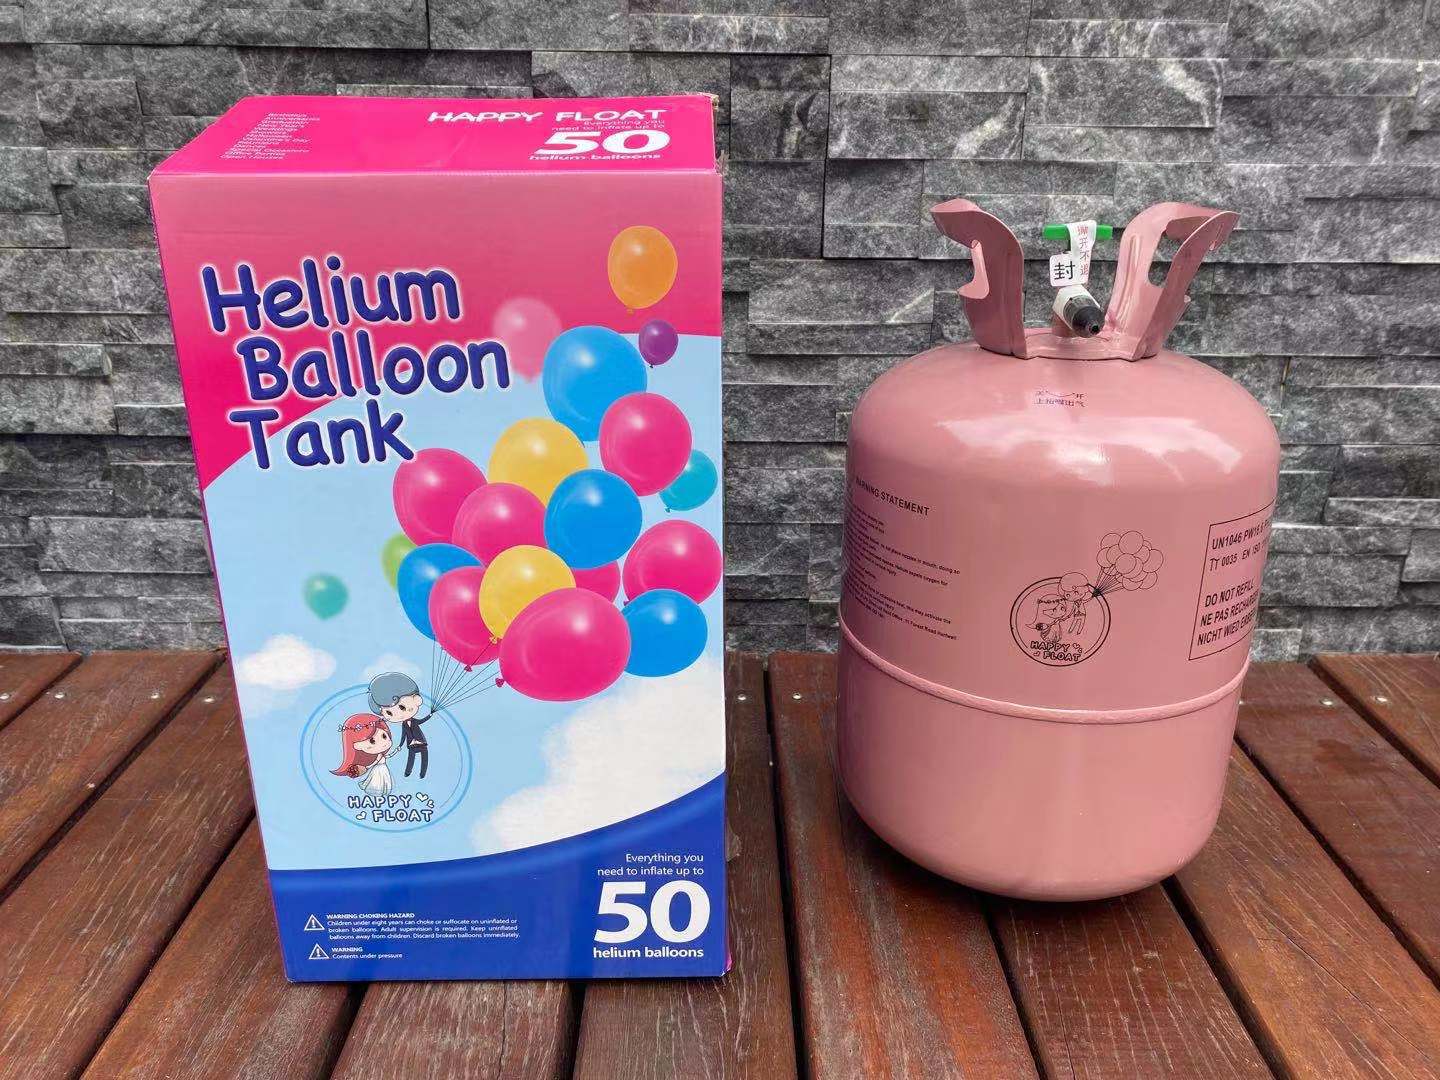 SINOLOVE - Balloon Time Helium Gas And 20 Pieces Balloon